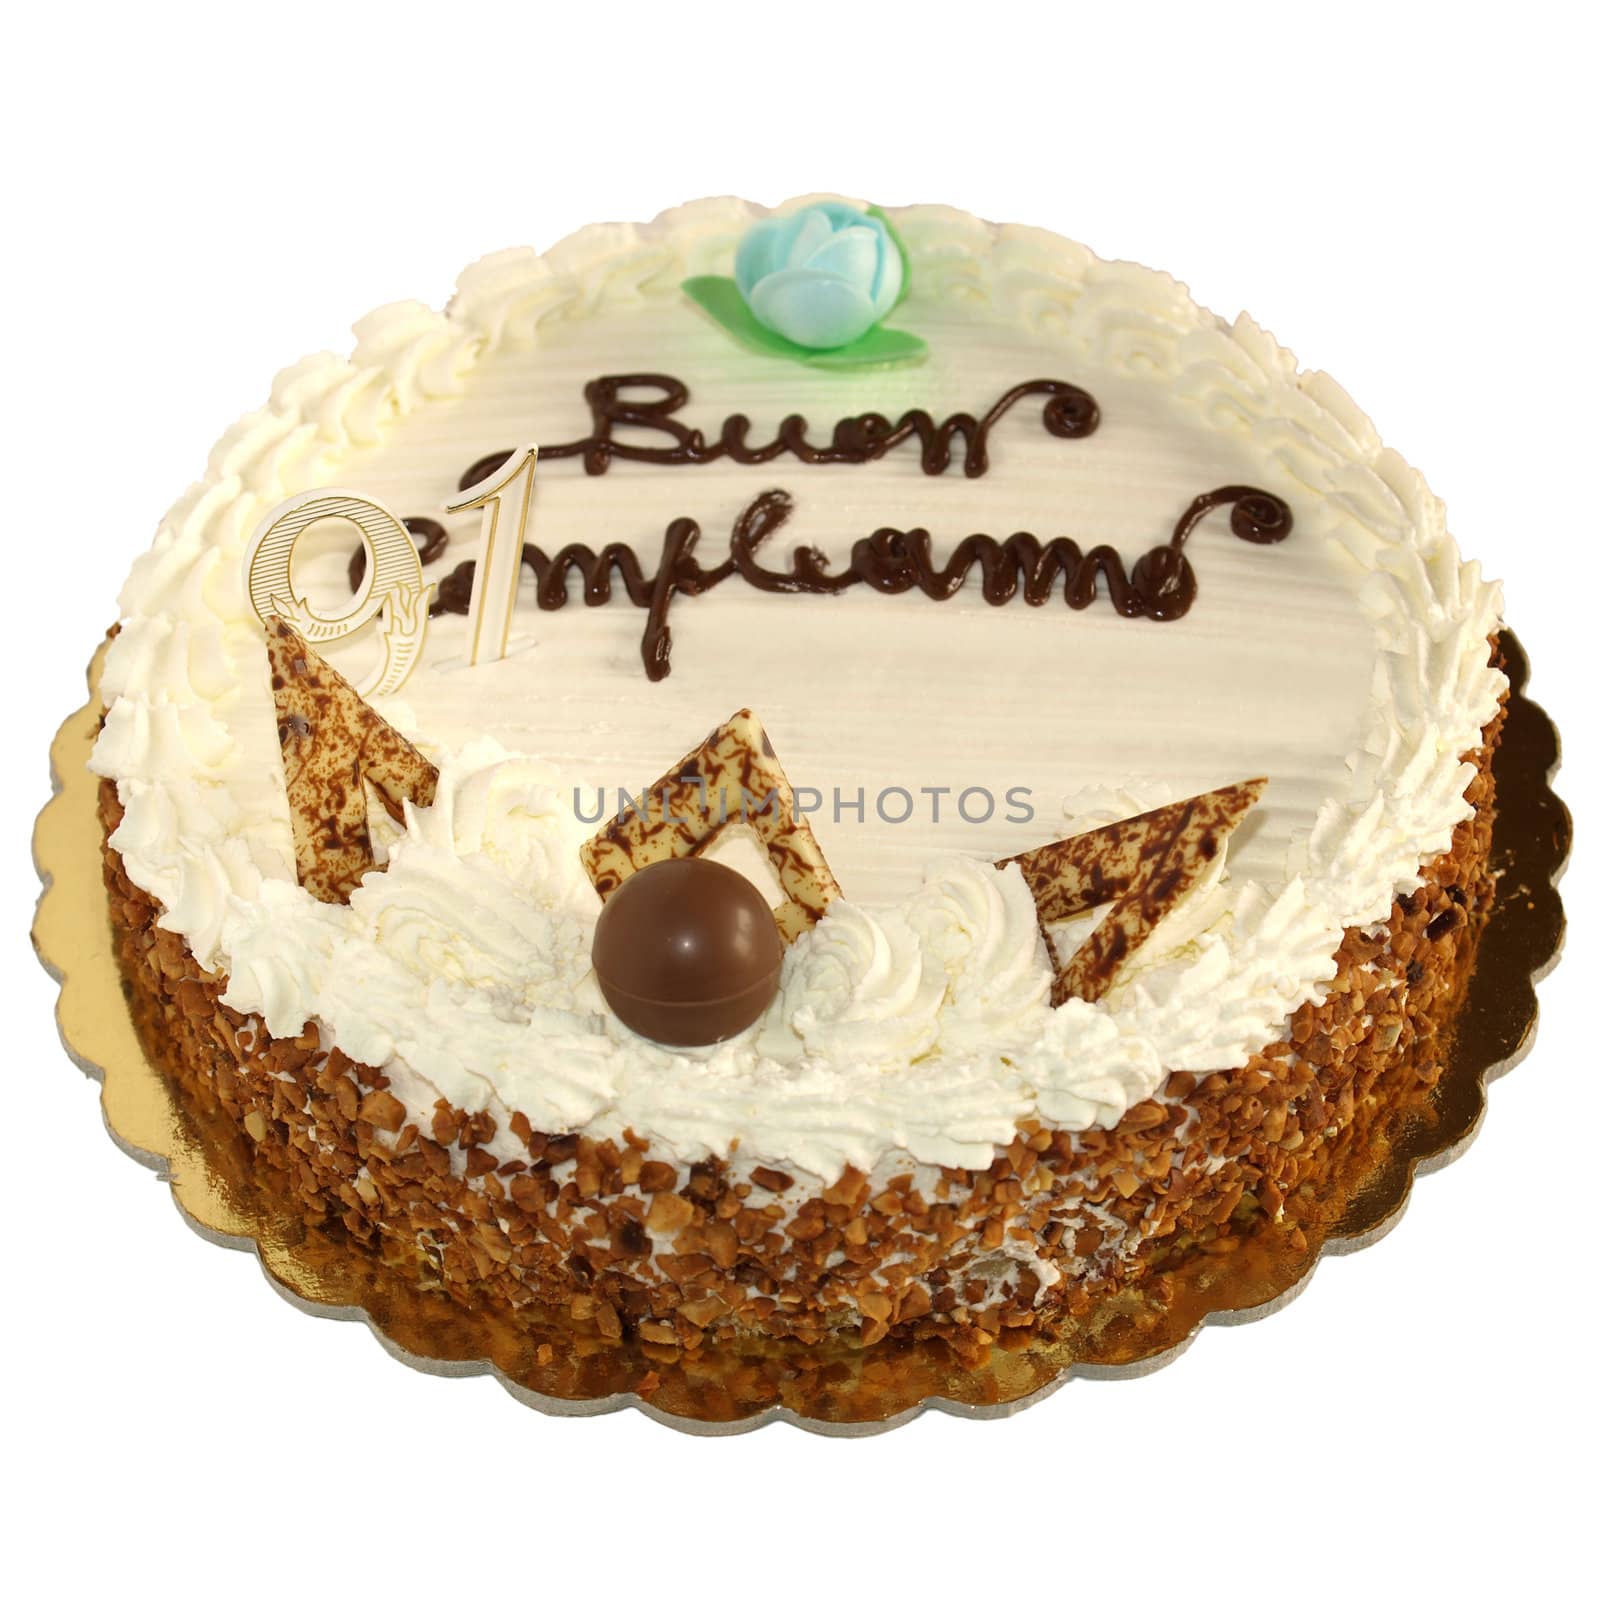 Happy Birthday chocolate pie cake